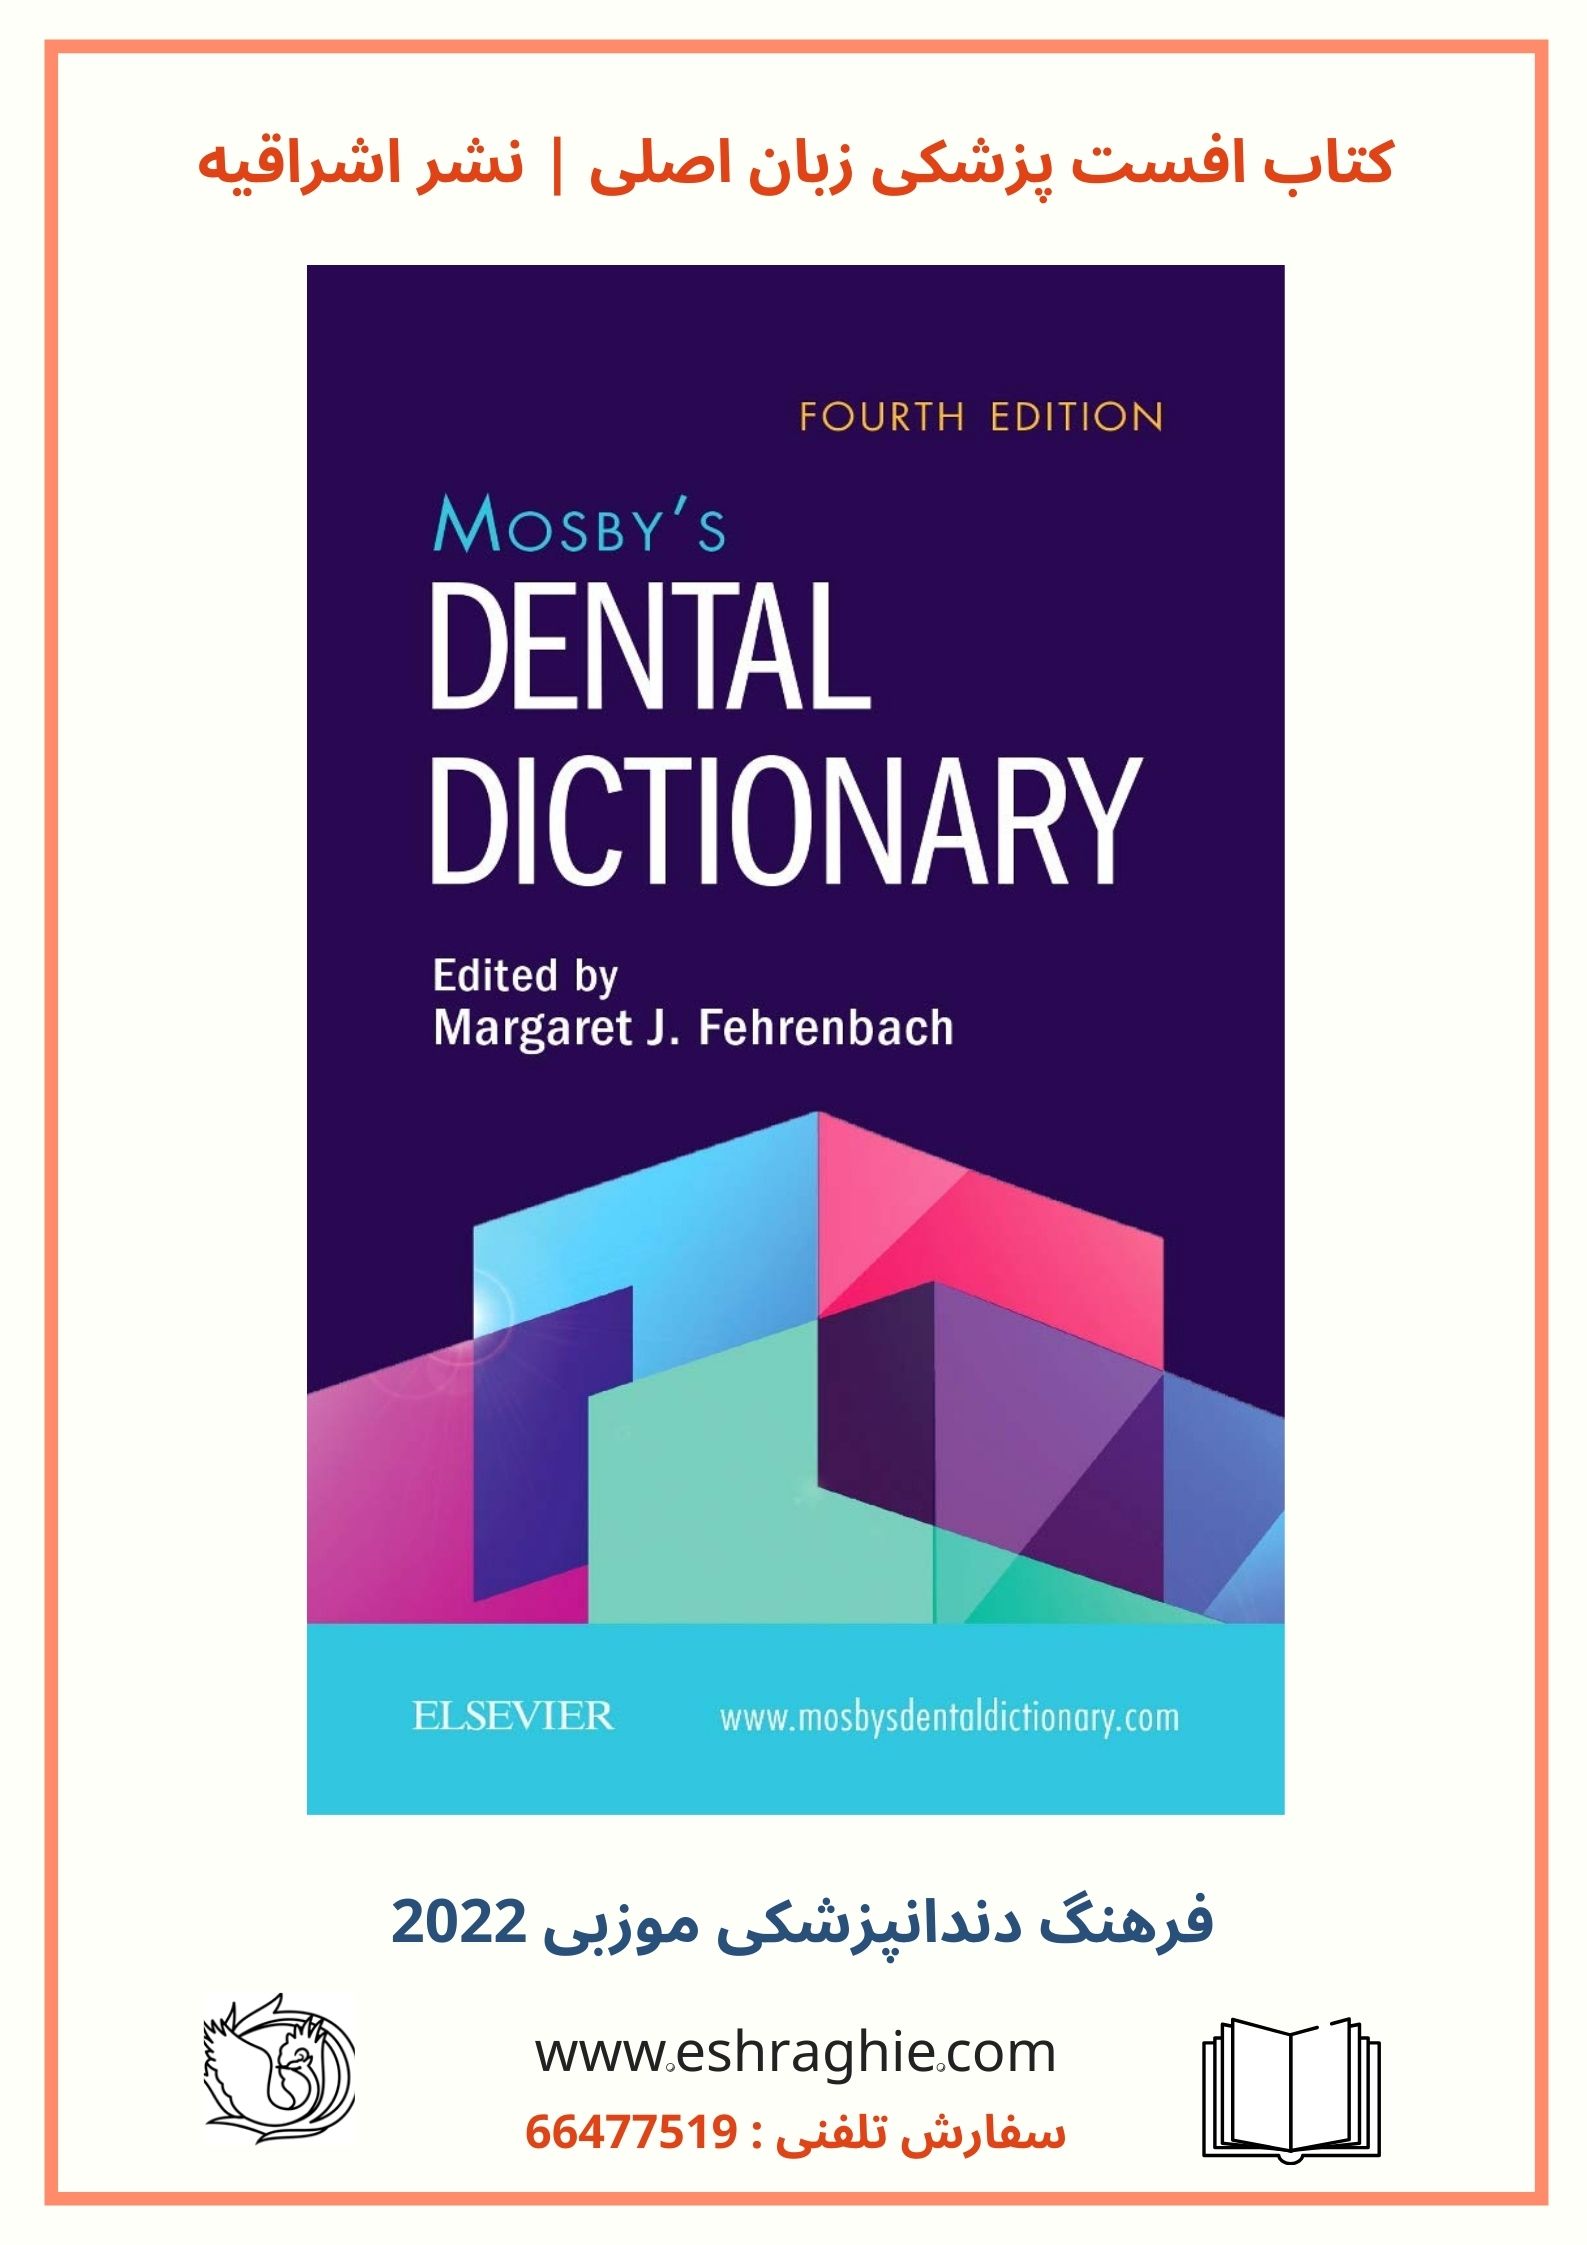 Mosby's Dental Dictionary 4th Edition | فرهنگ دندانپزشکی موزبی 2019